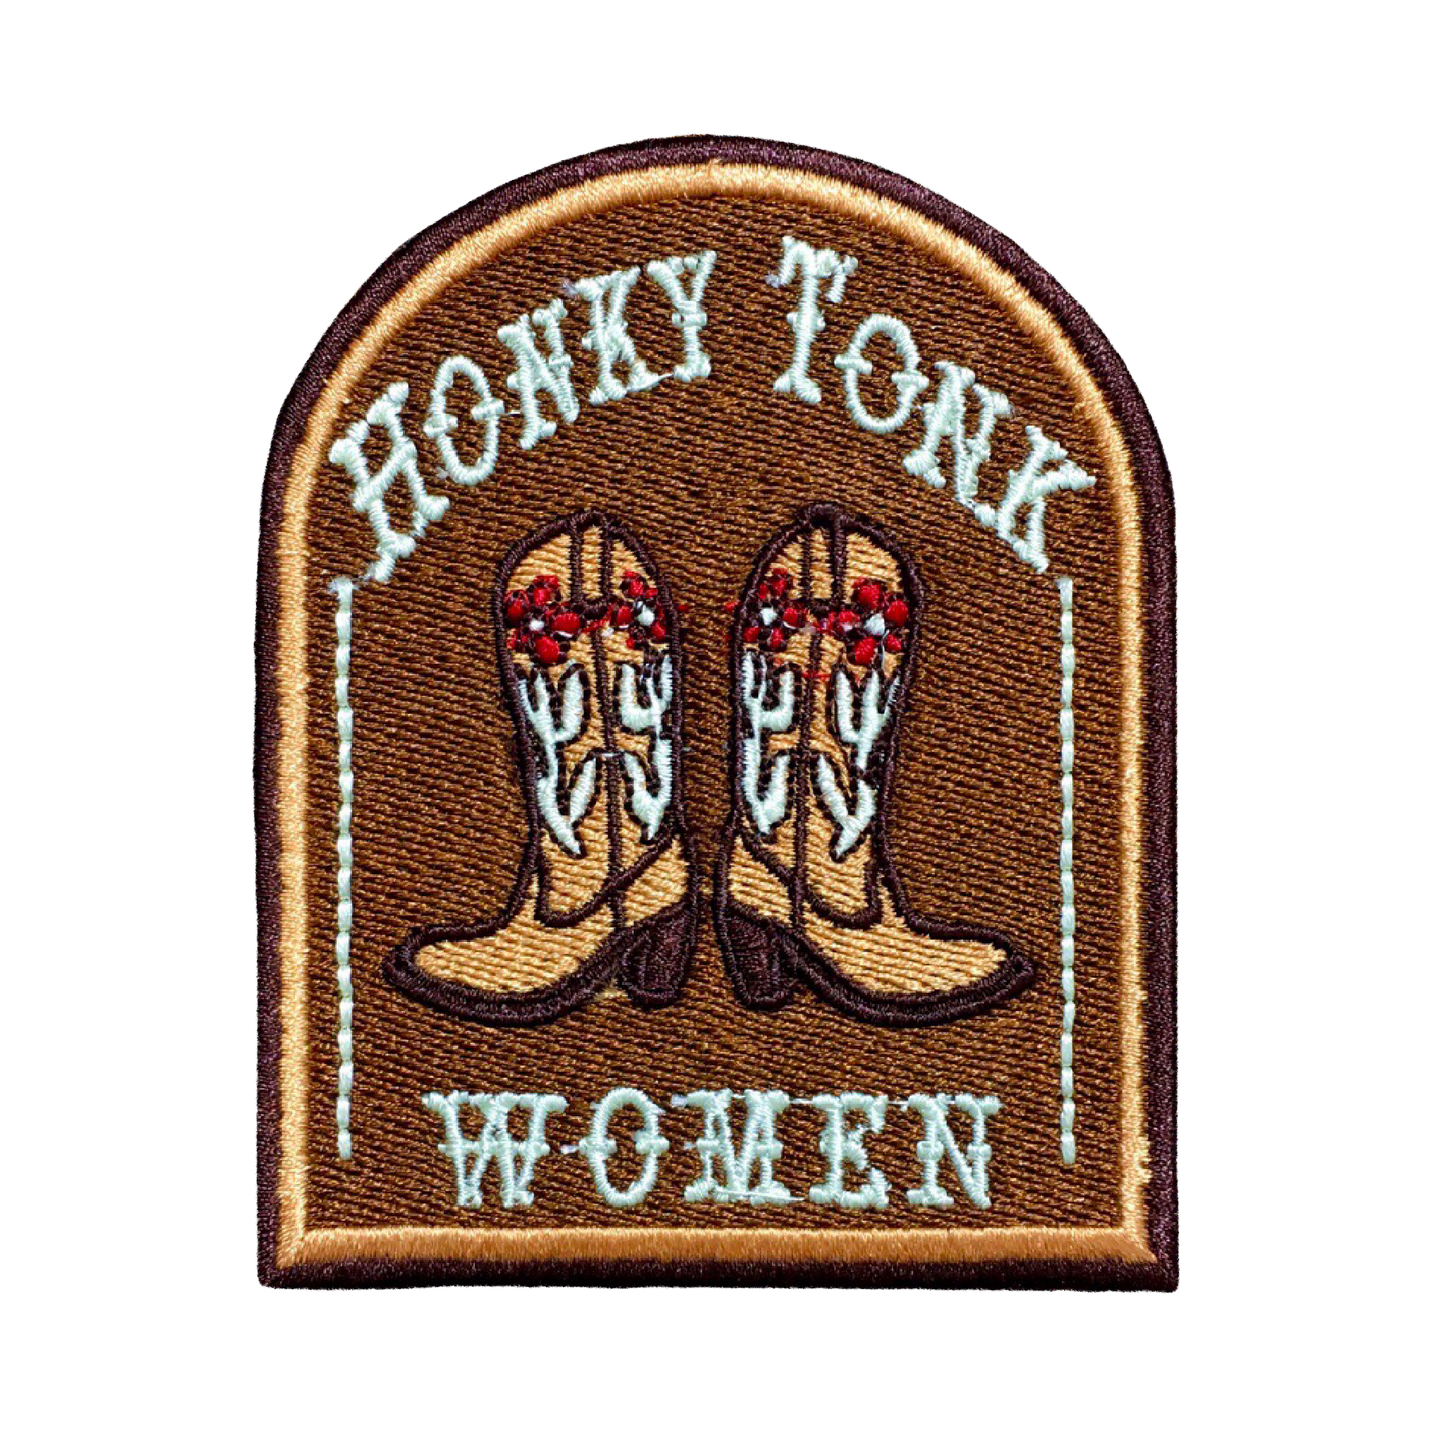 The Honky Tonk Women Patch